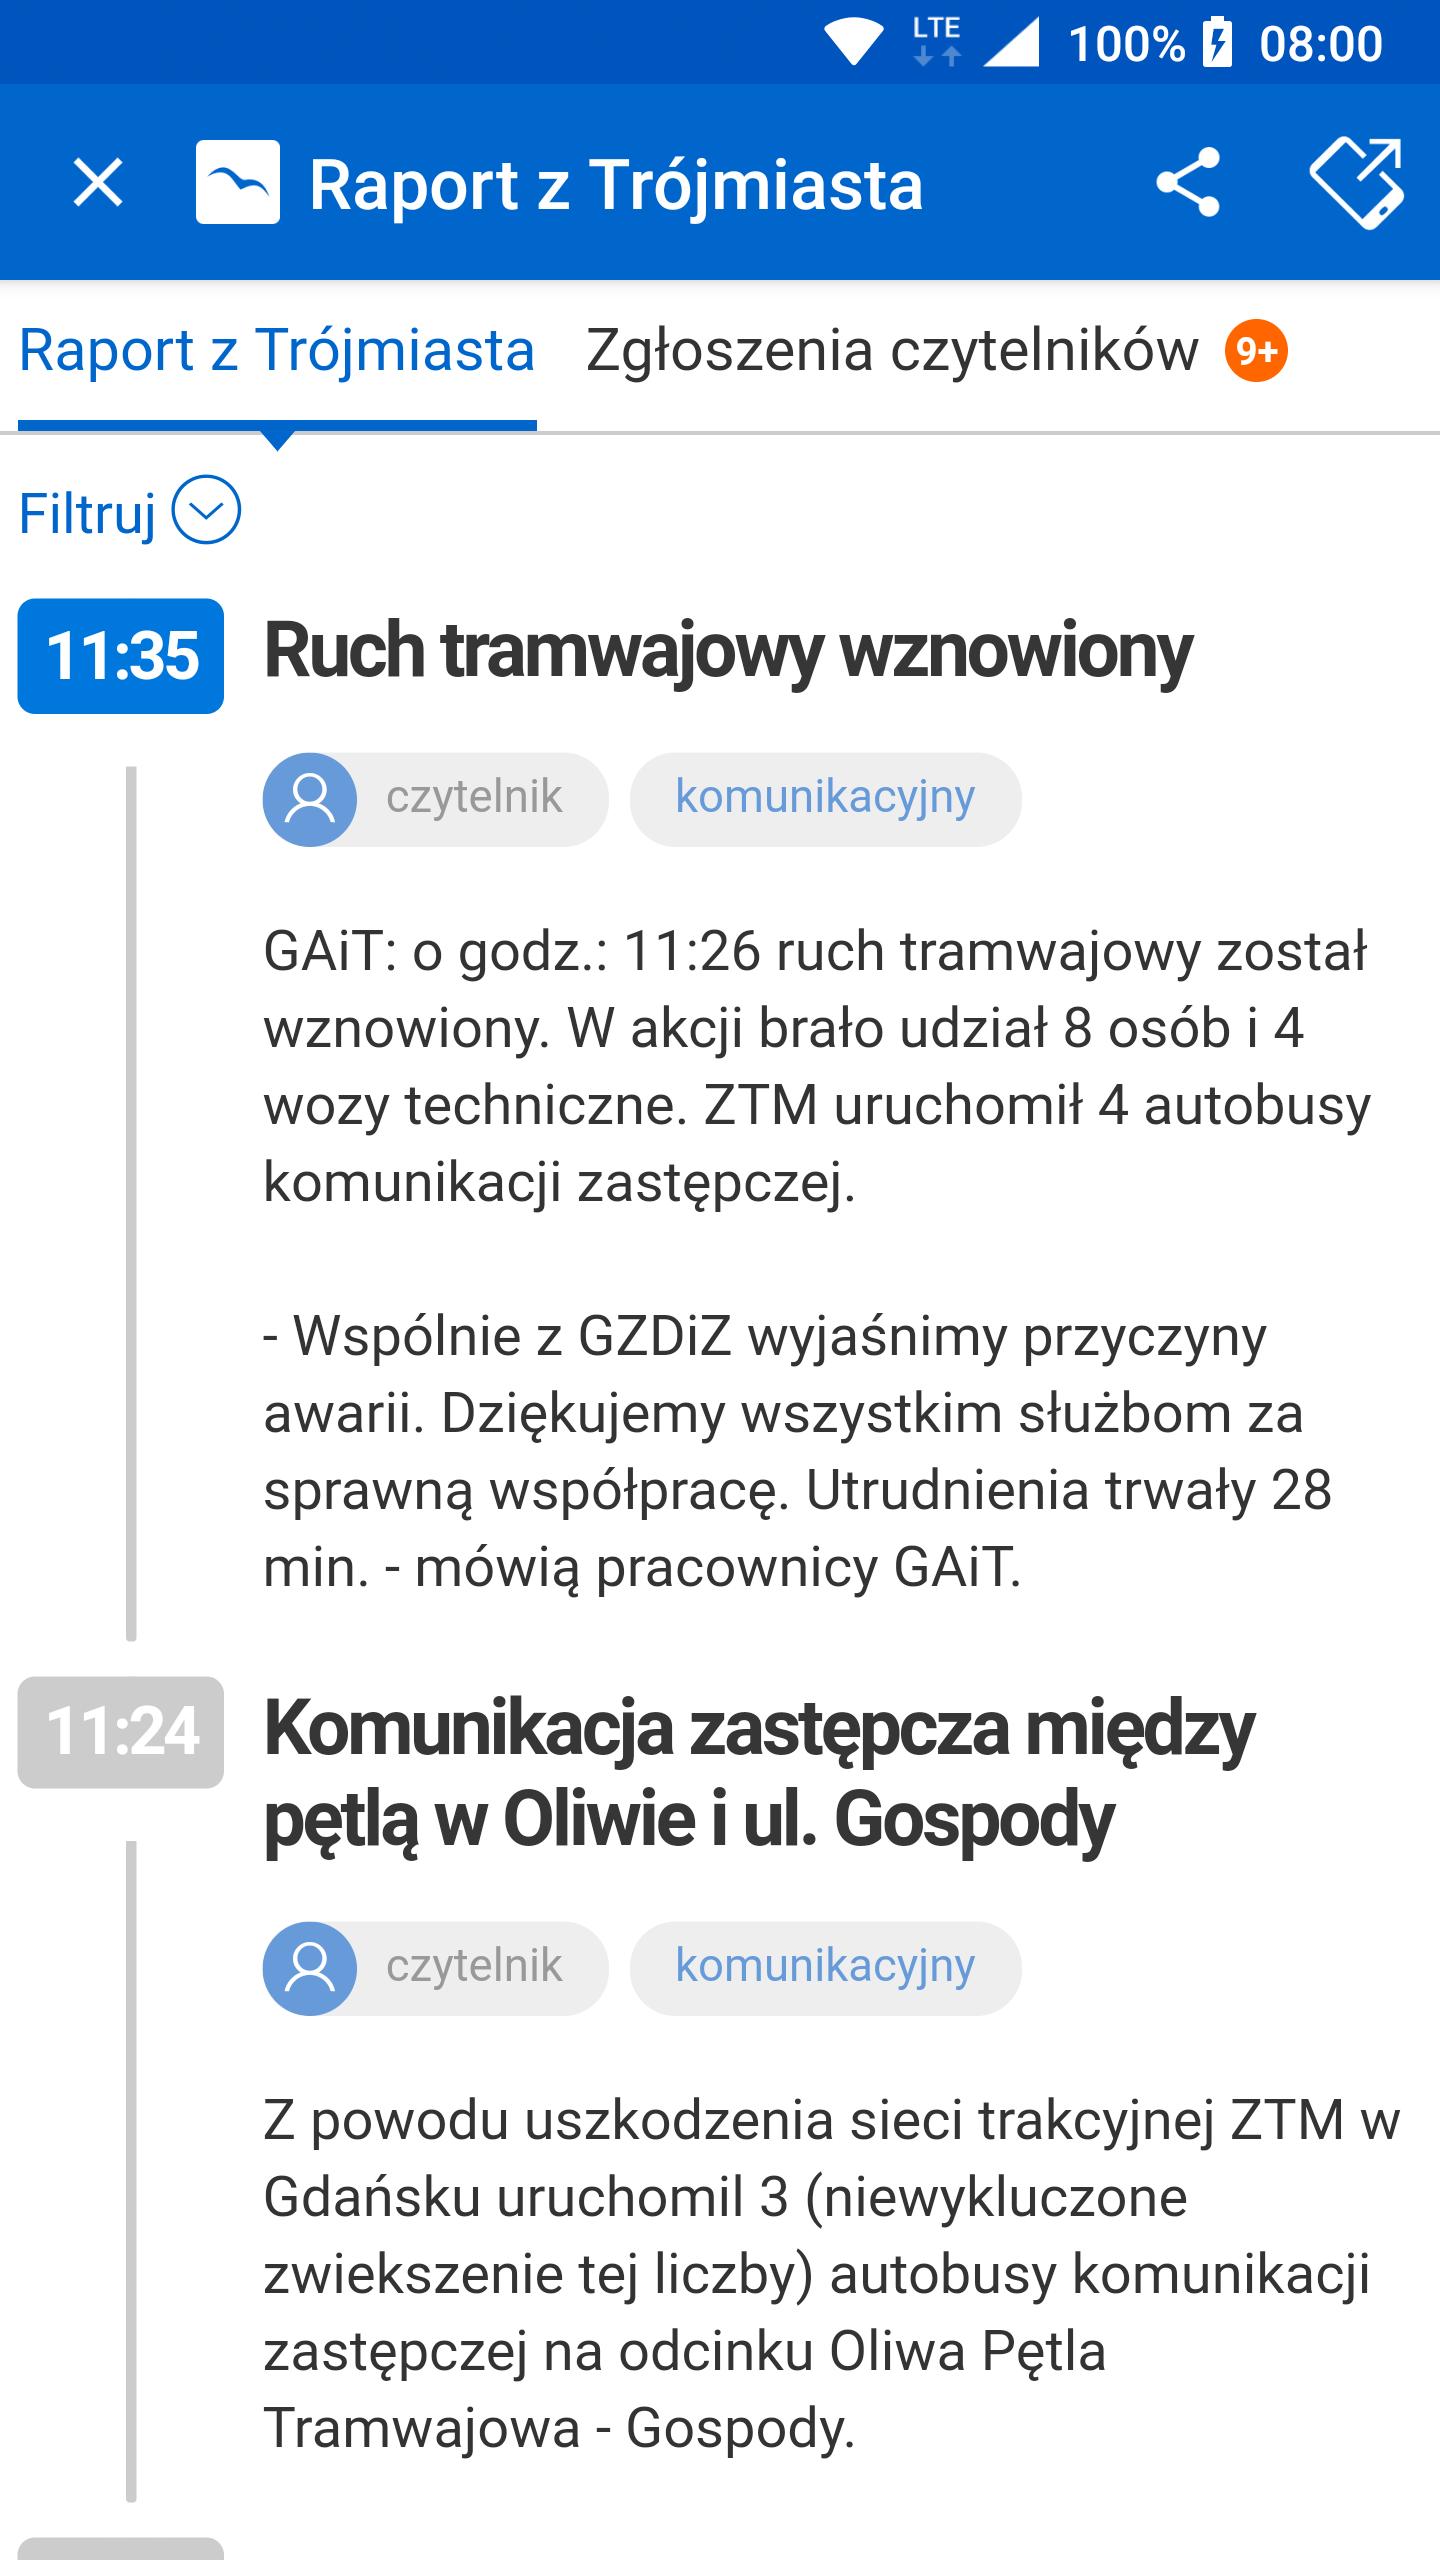 Trojmiasto.pl